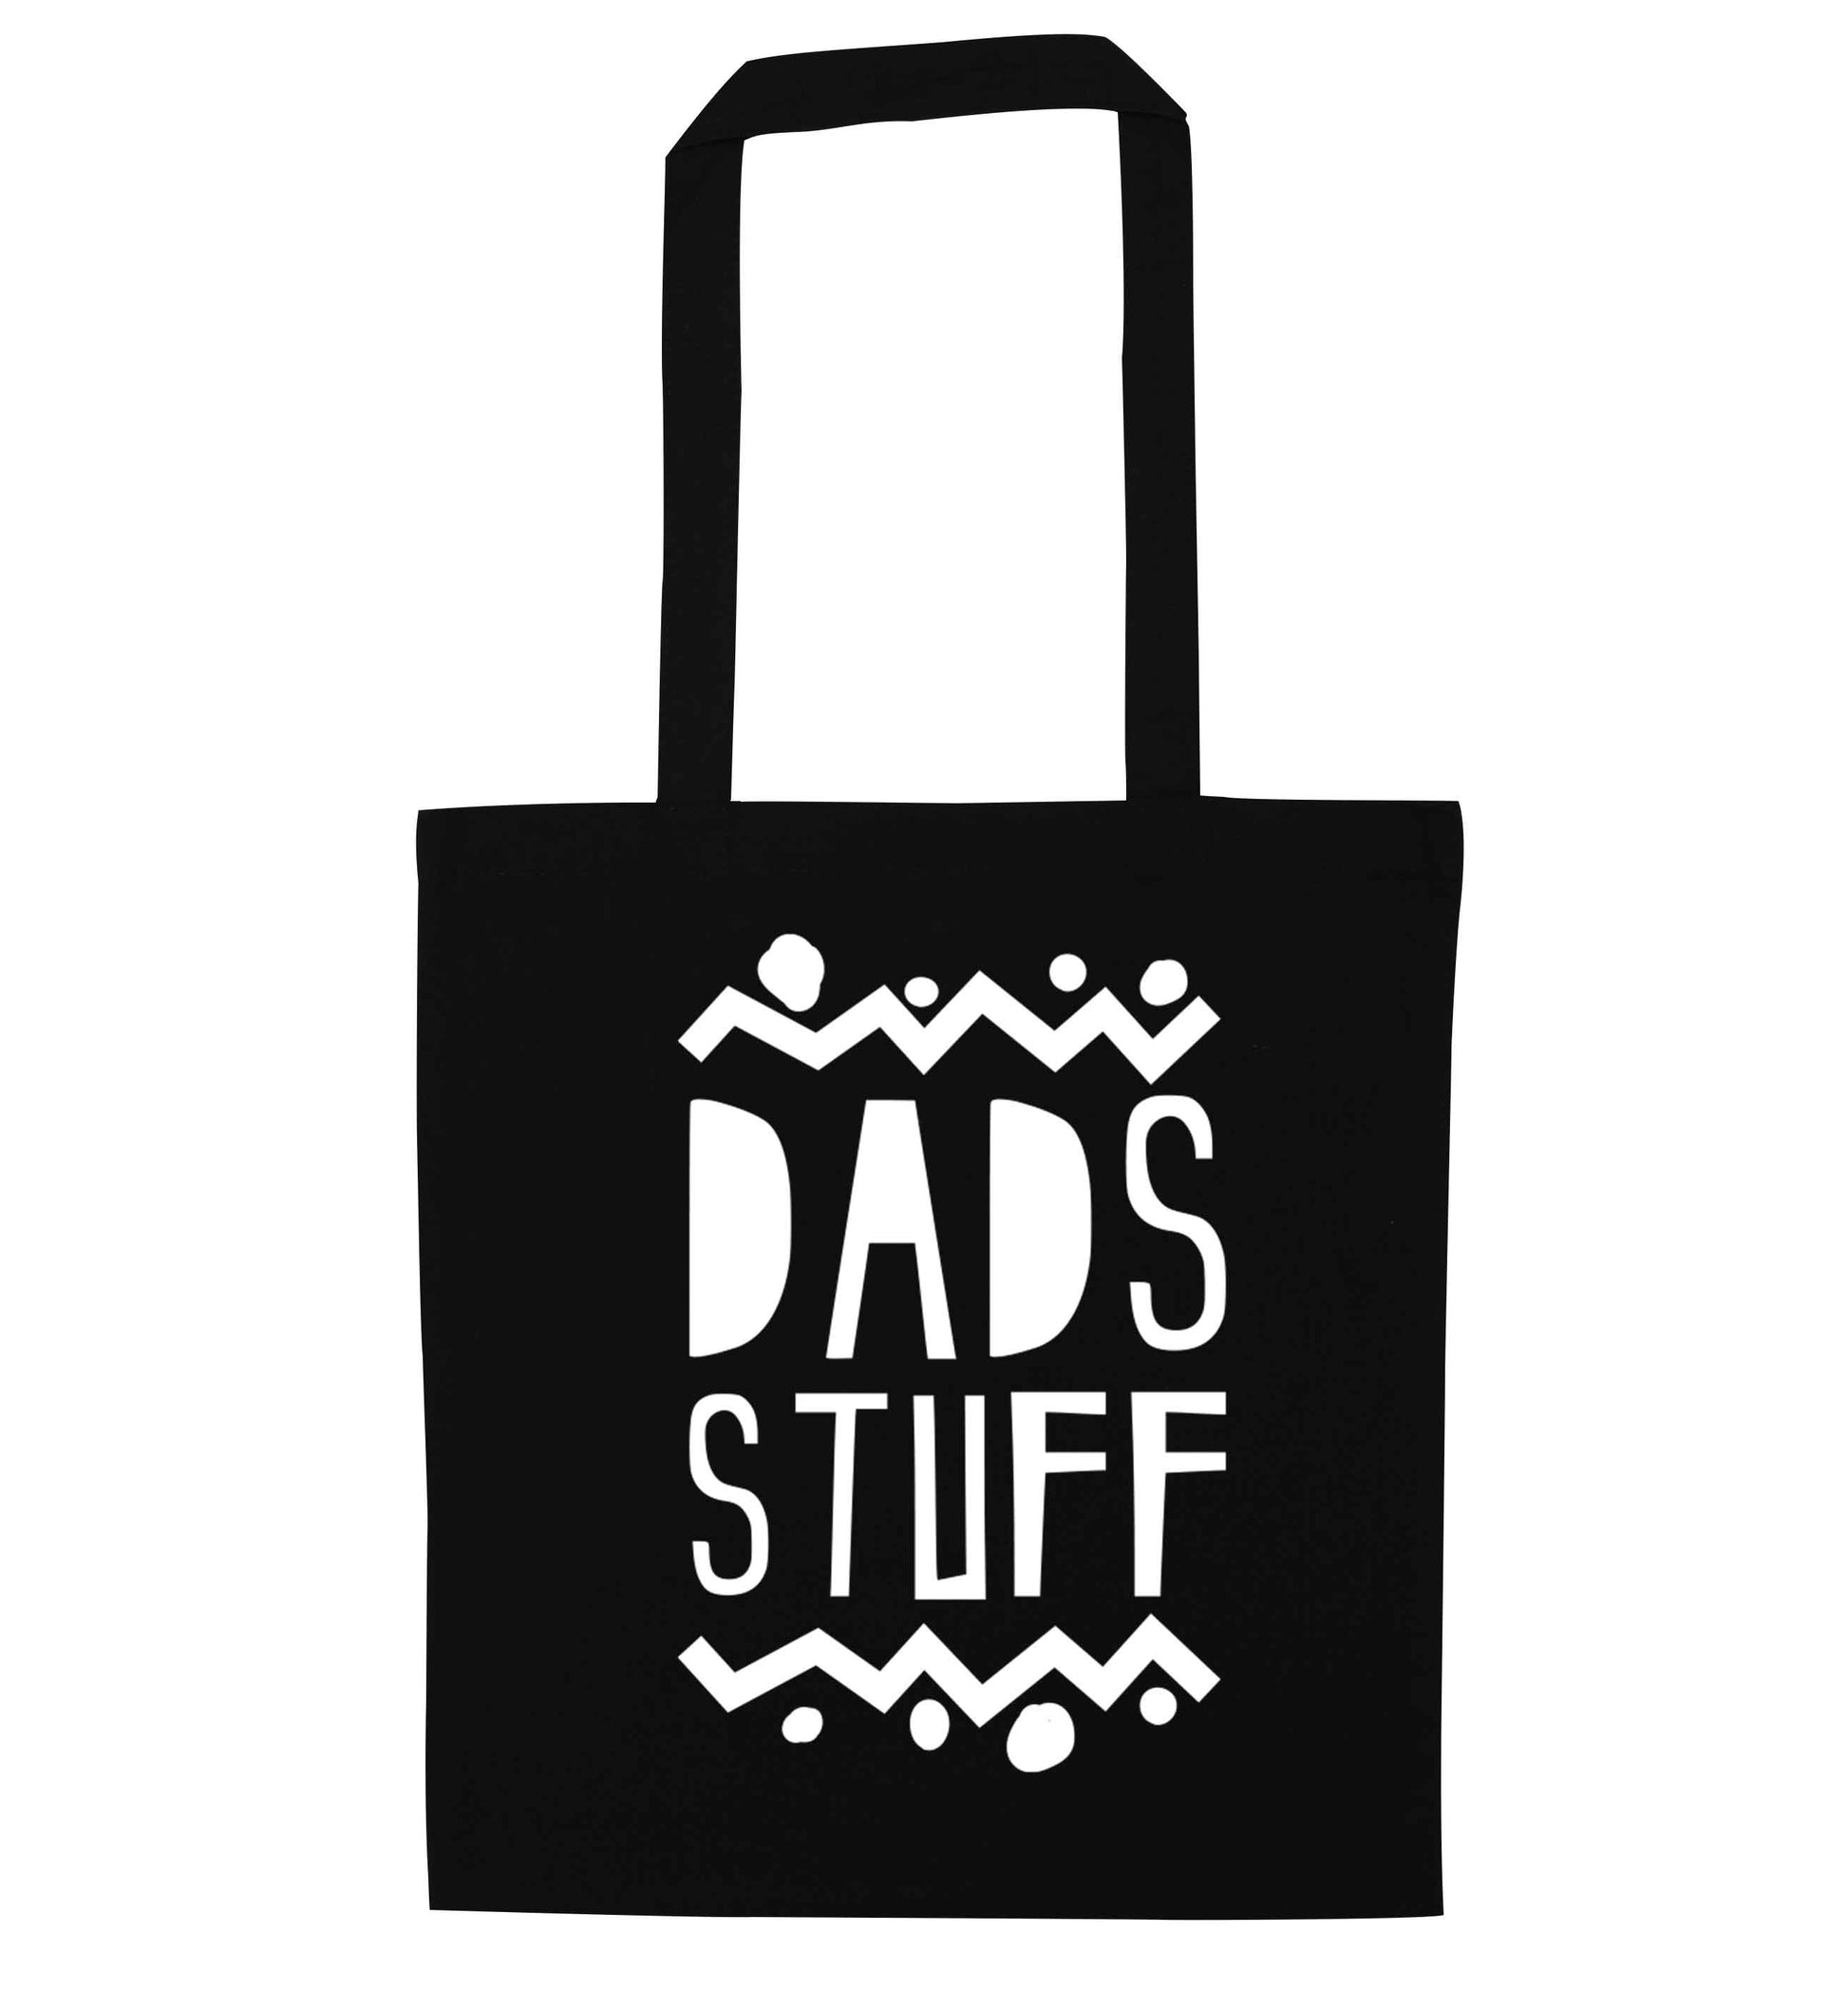 Dads stuff black tote bag